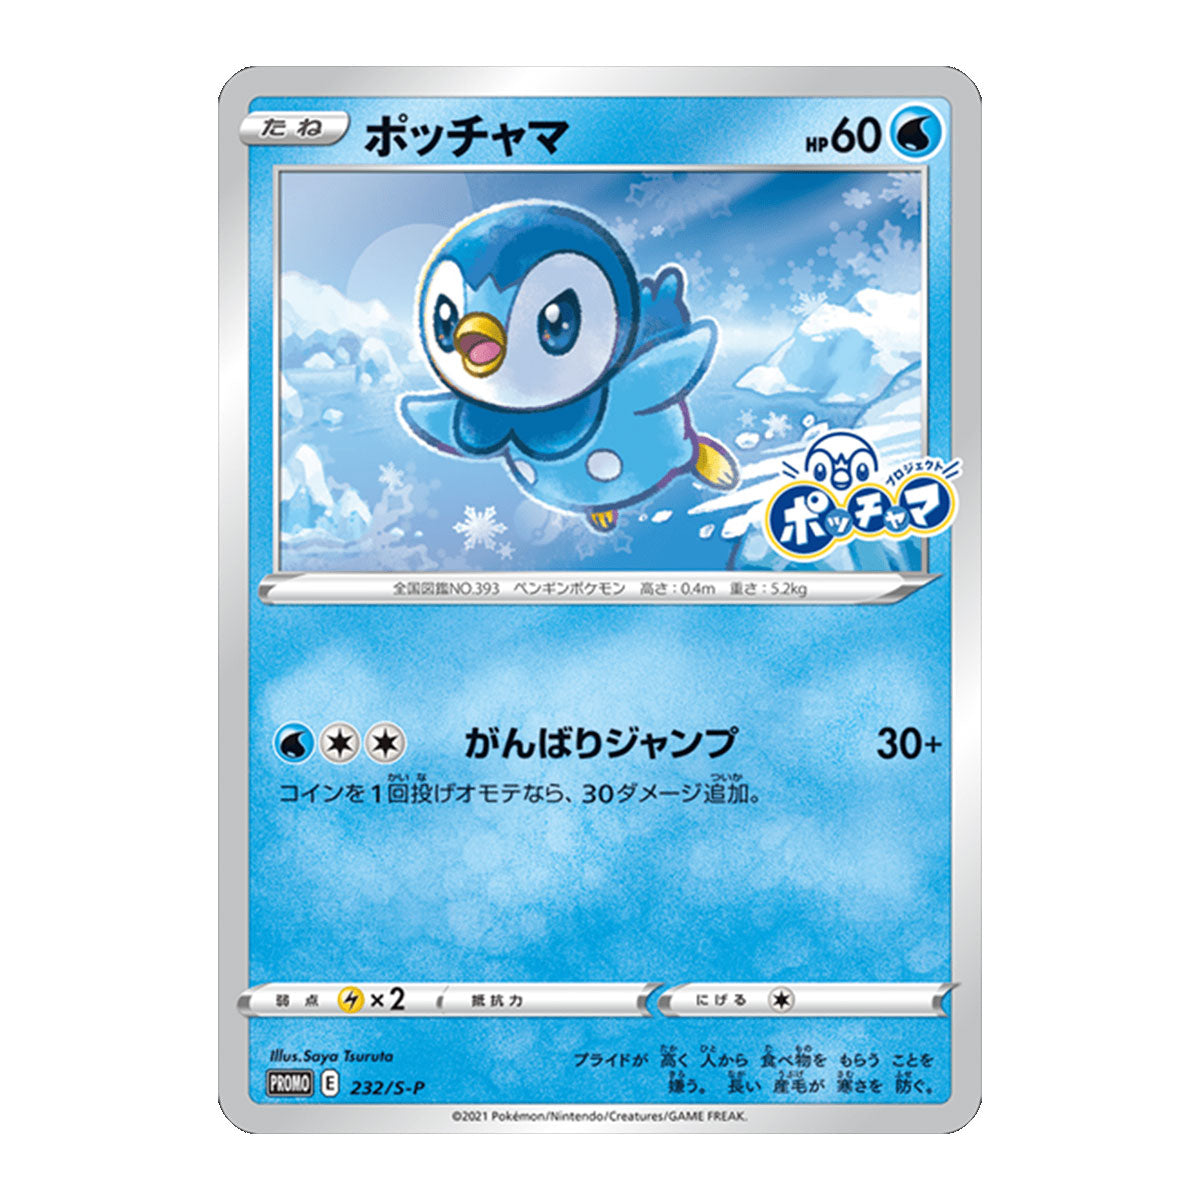 JPN Pokemon TCG : Piplup Promo 232/S-P (Single Card)